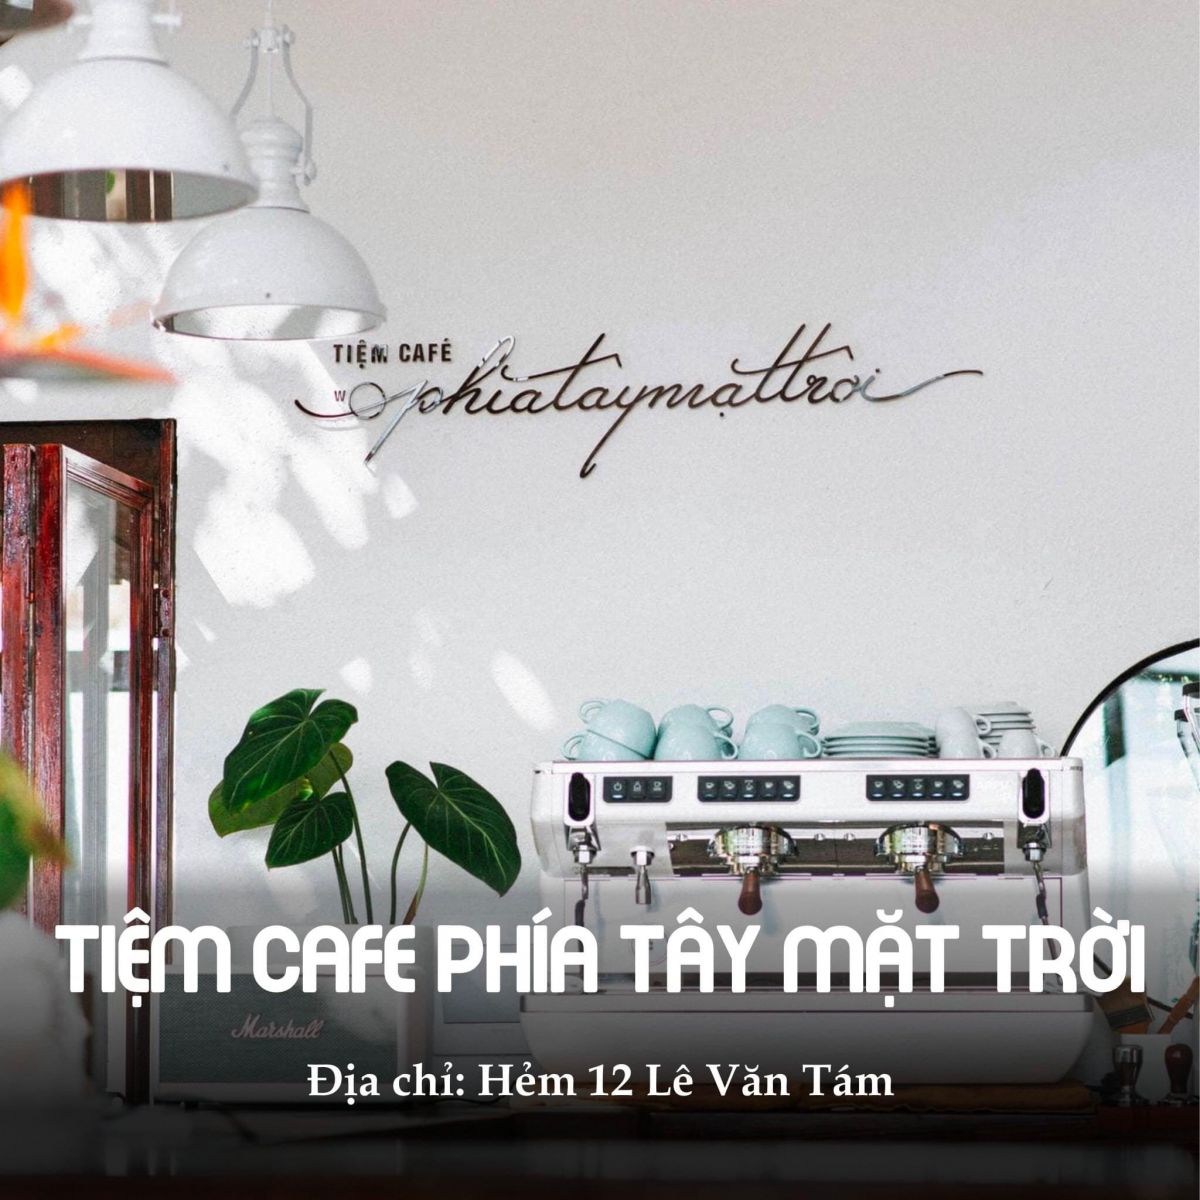 Tiem cafe phia tay mat troi da lat